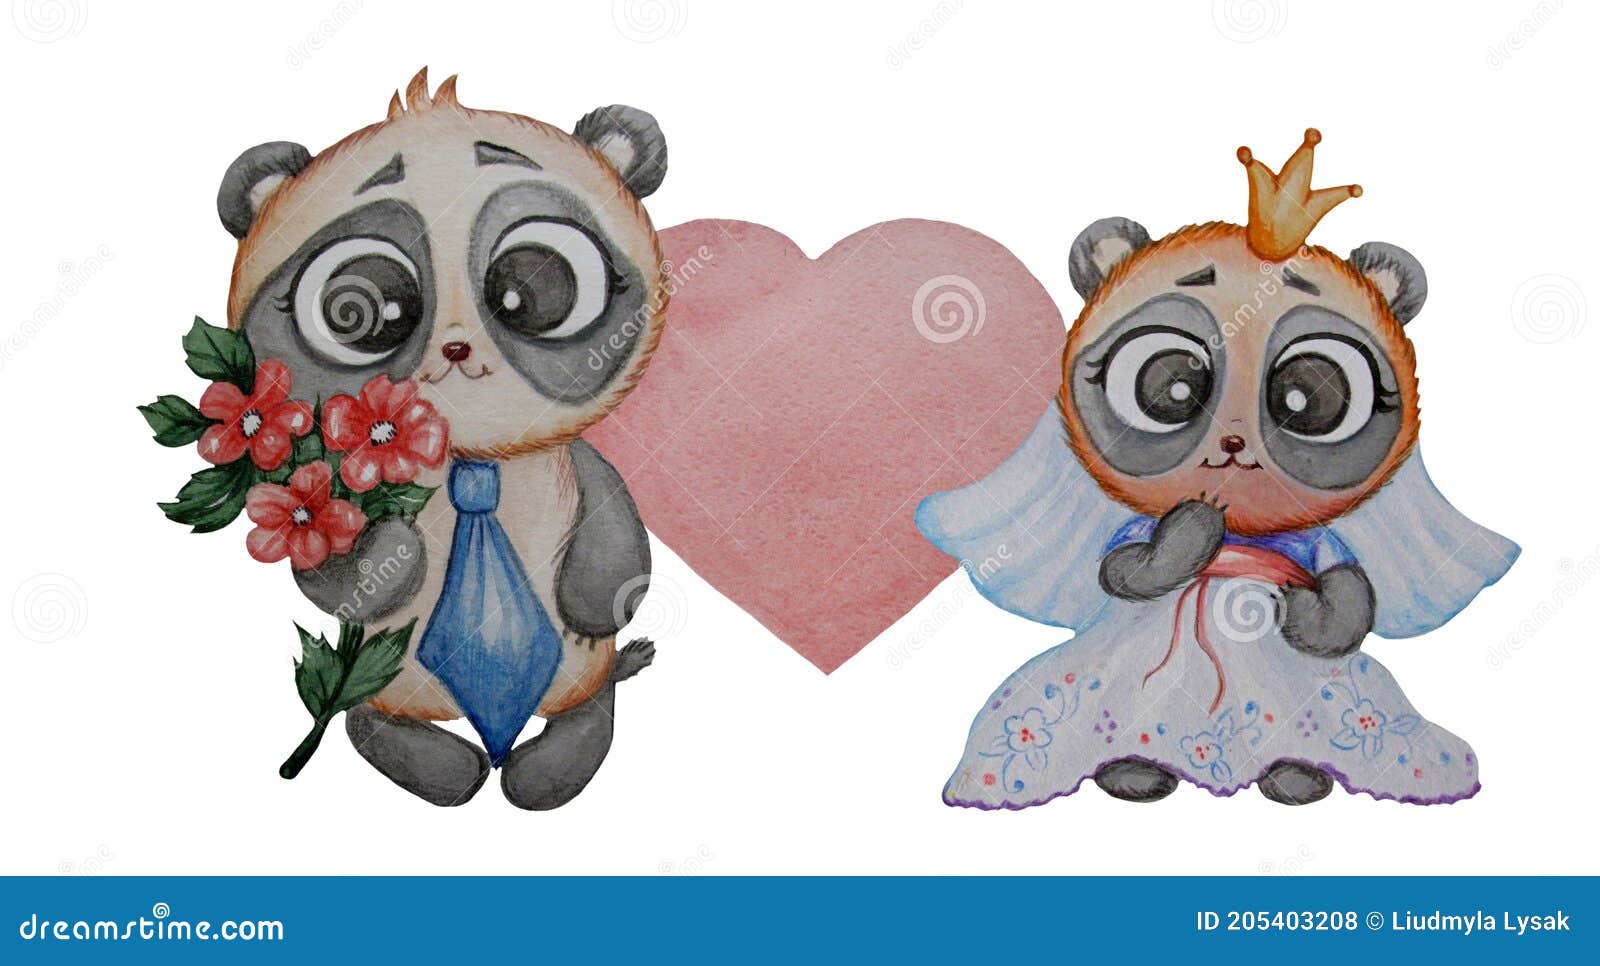 https://thumbs.dreamstime.com/z/couple-pandas-love-groom-tie-bouquet-red-flowers-bride-wedding-dress-veil-crown-background-large-heart-205403208.jpg